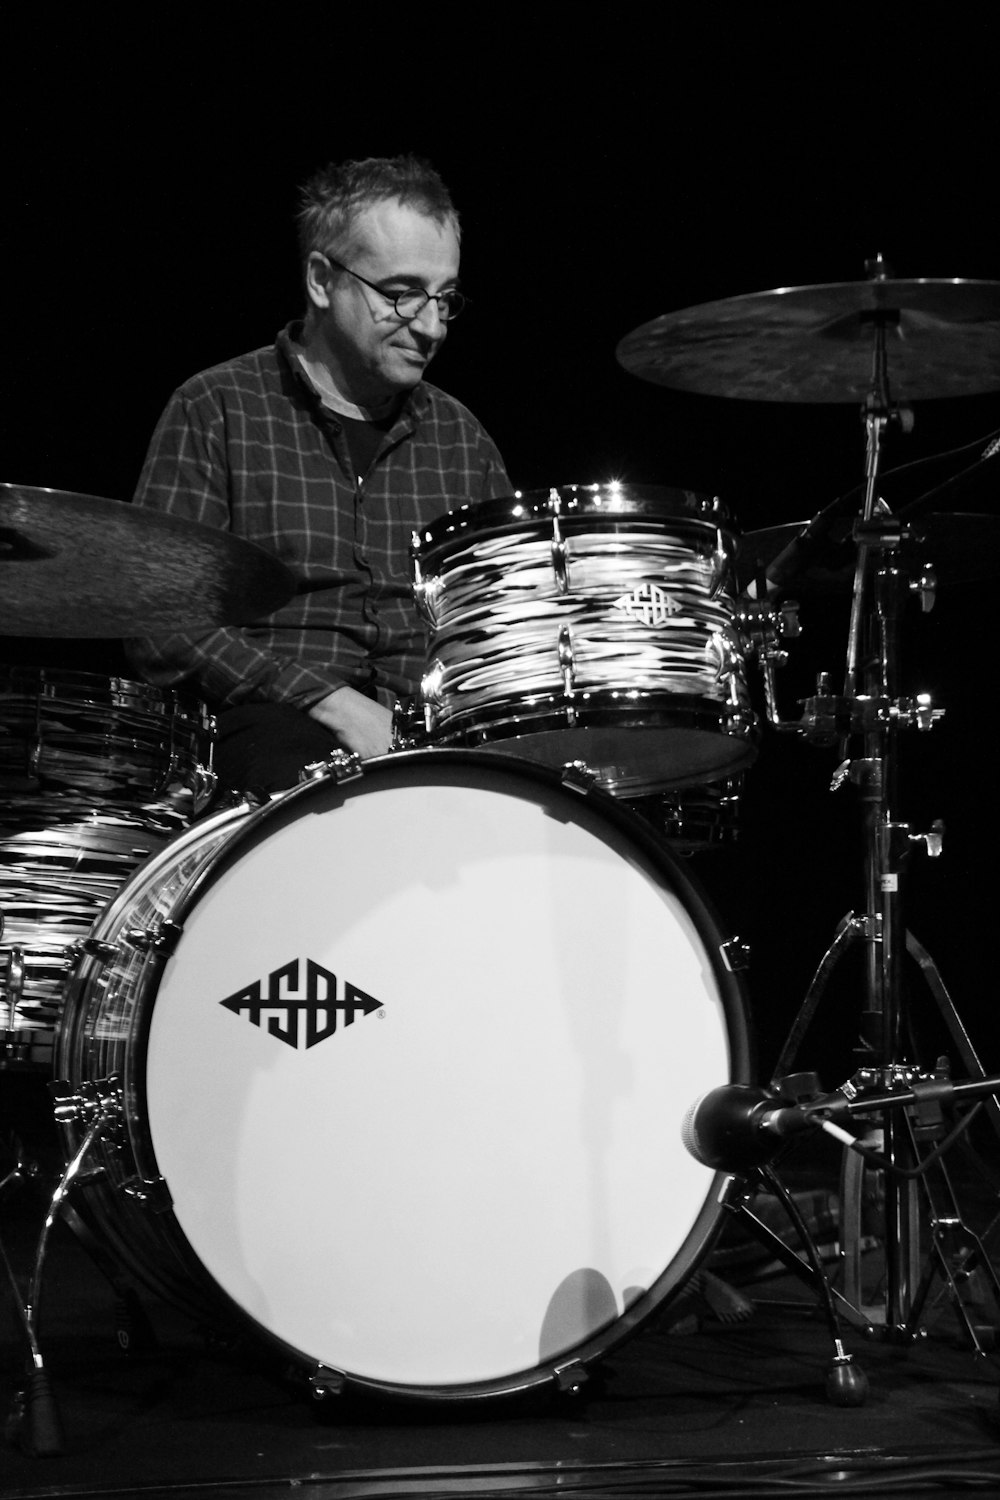 man in black and white plaid dress shirt playing drum